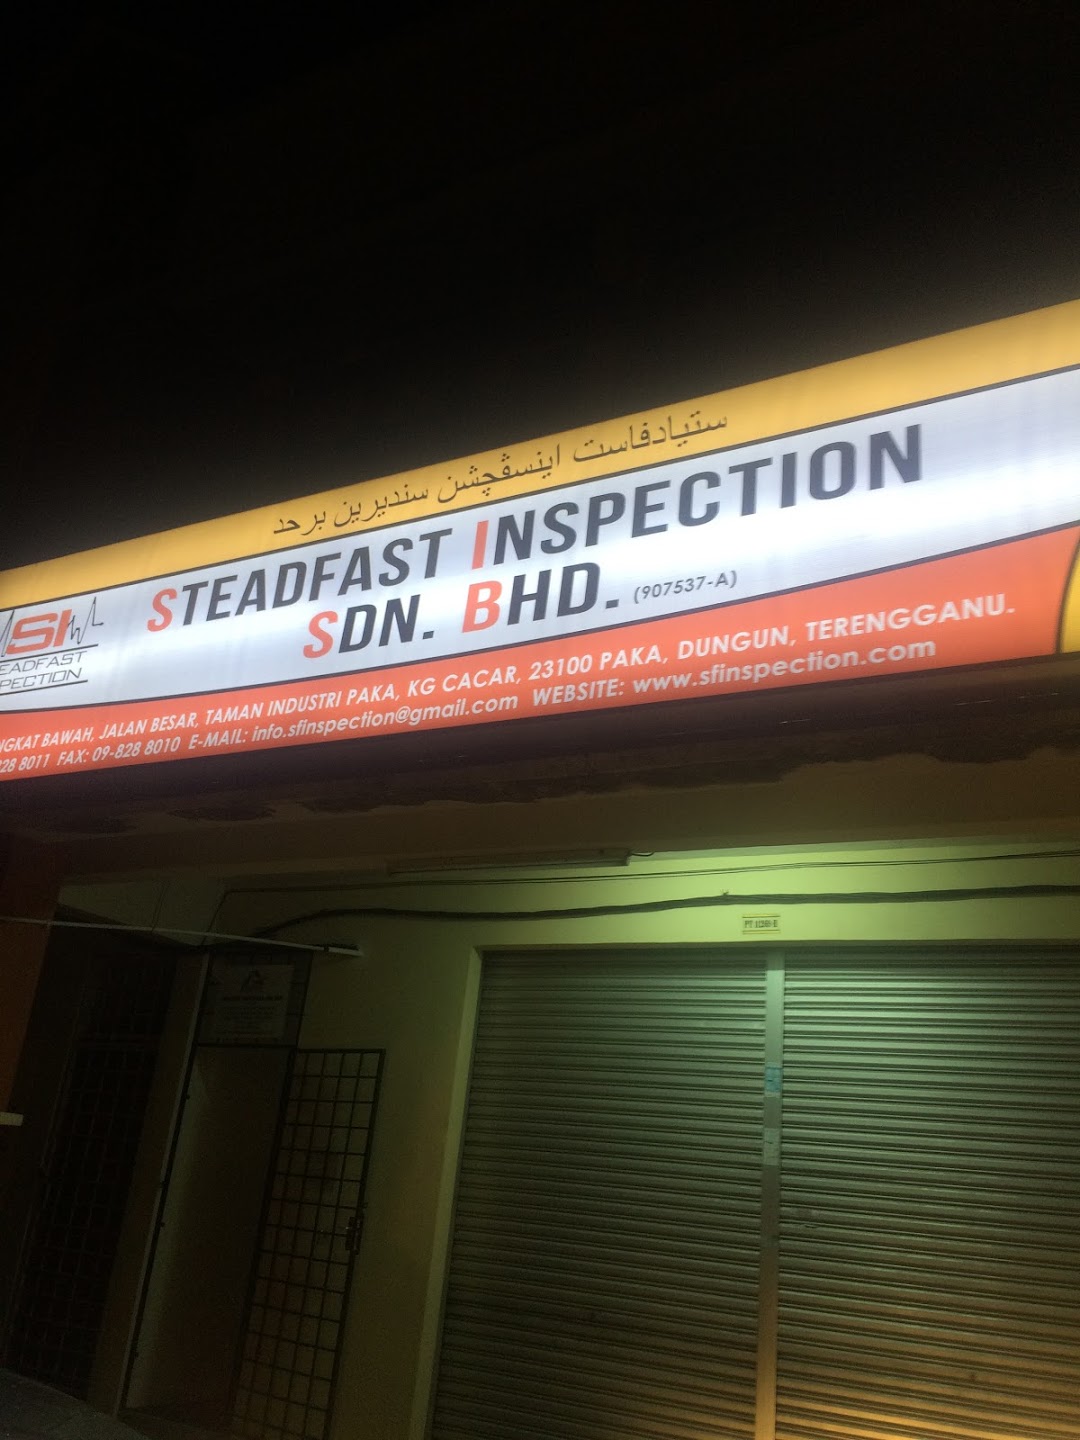 Steadfast Inspection Sdn. Bhd.